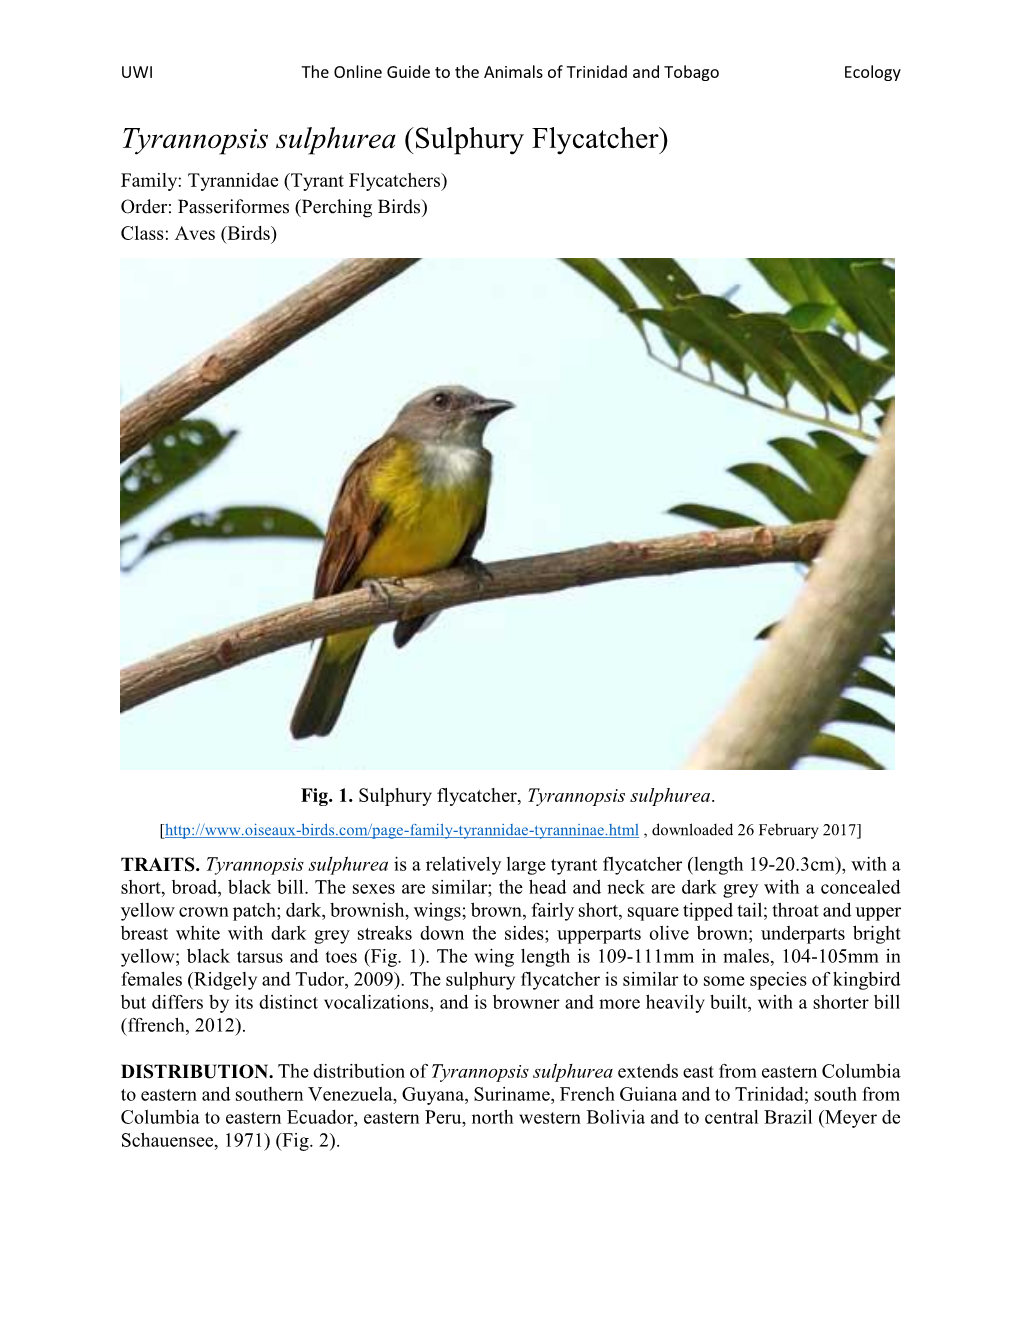 Tyrannopsis Sulphurea (Sulphury Flycatcher) Family: Tyrannidae (Tyrant Flycatchers) Order: Passeriformes (Perching Birds) Class: Aves (Birds)